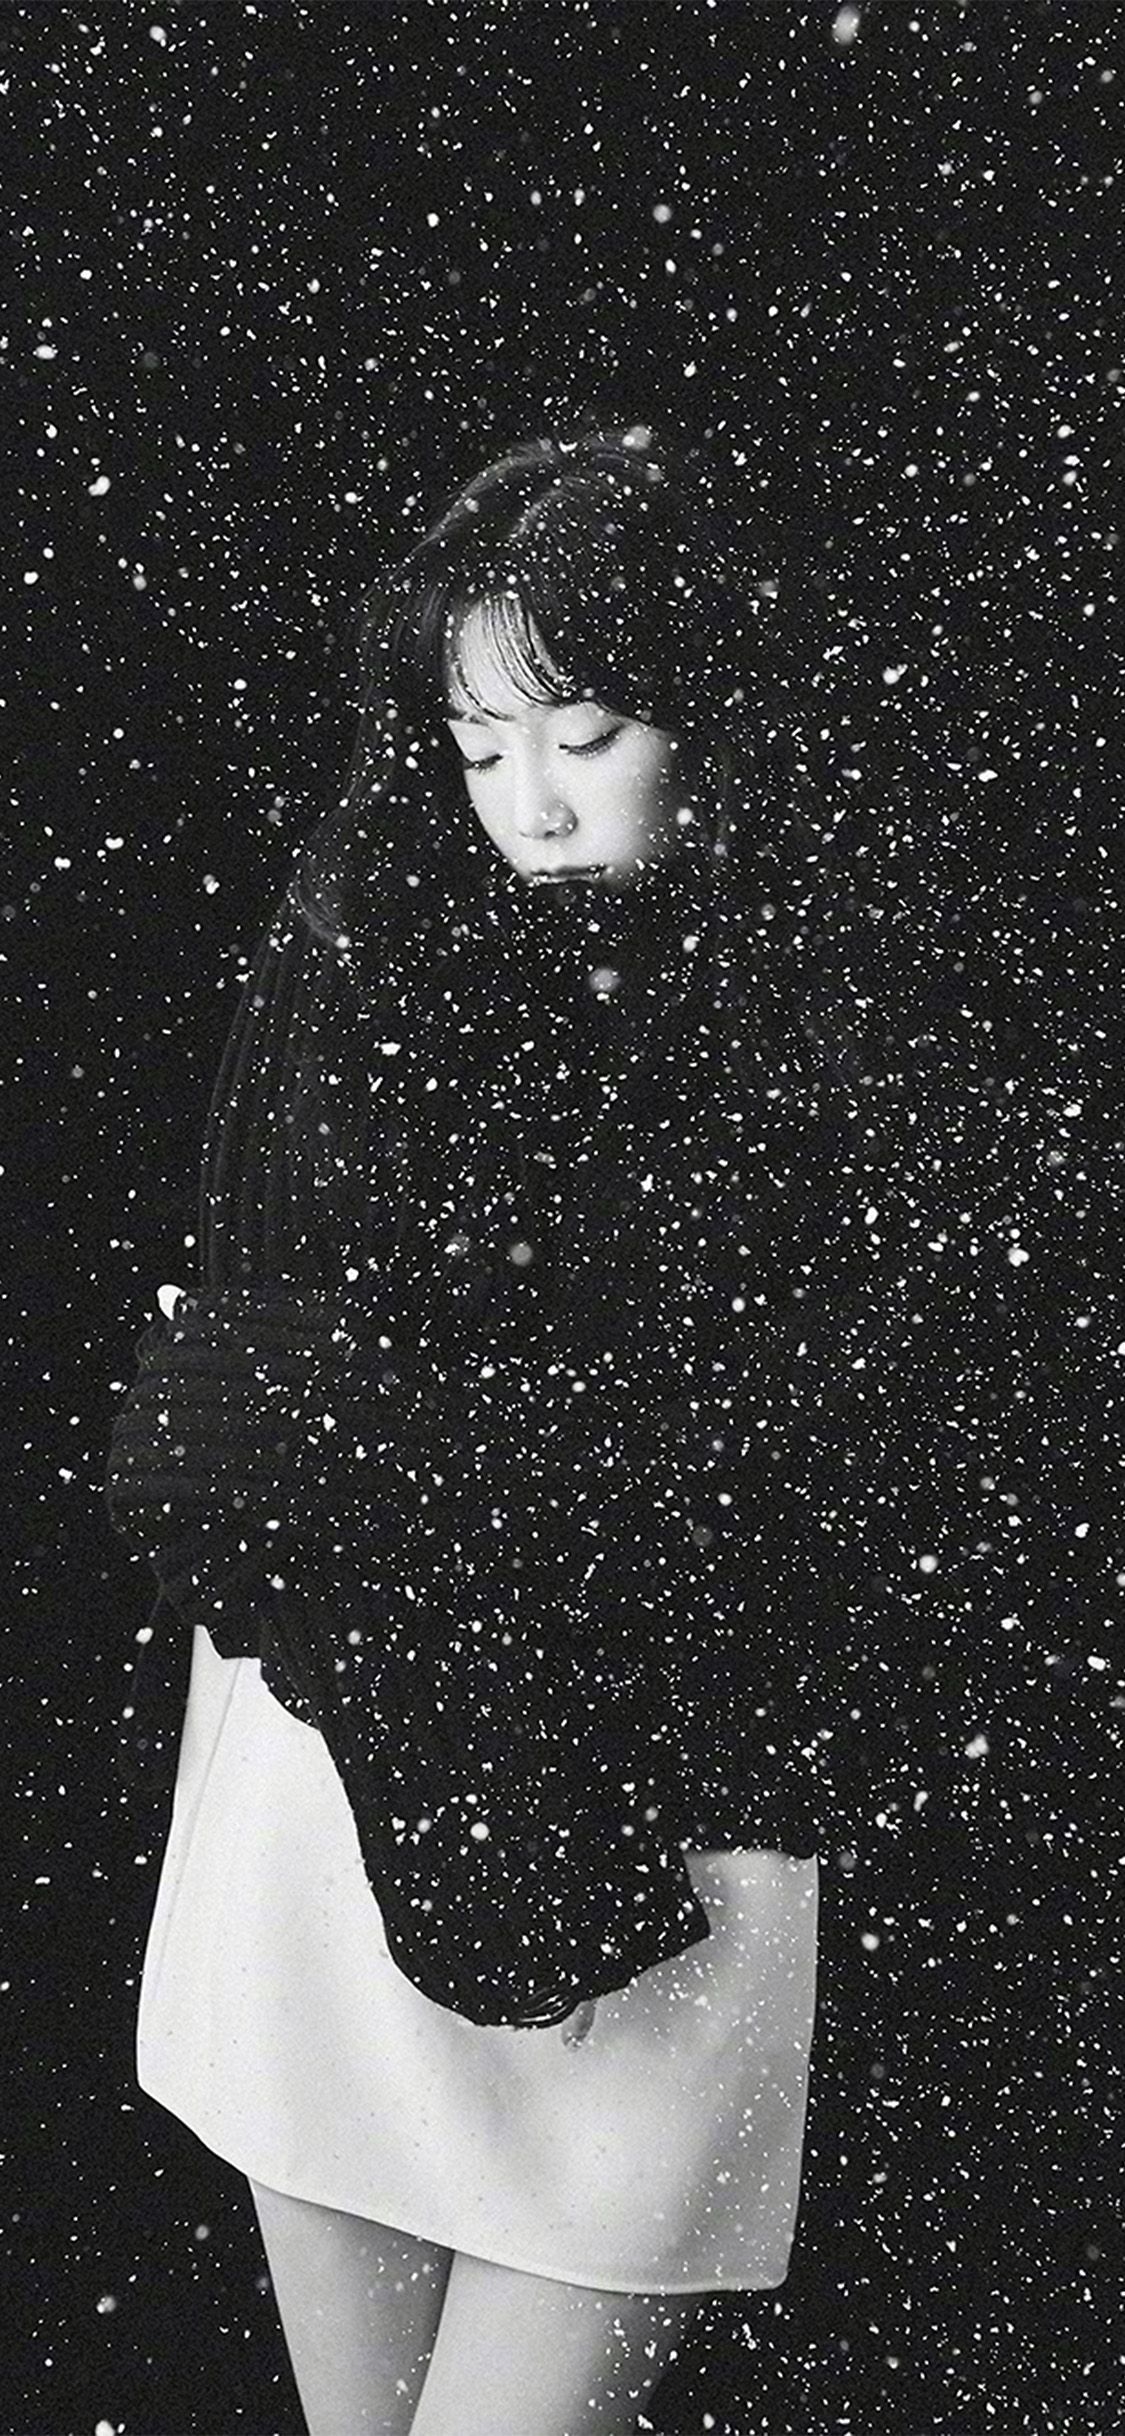 iPhoneX wallpaper: snow girl snsd taeyeon black bw kpop